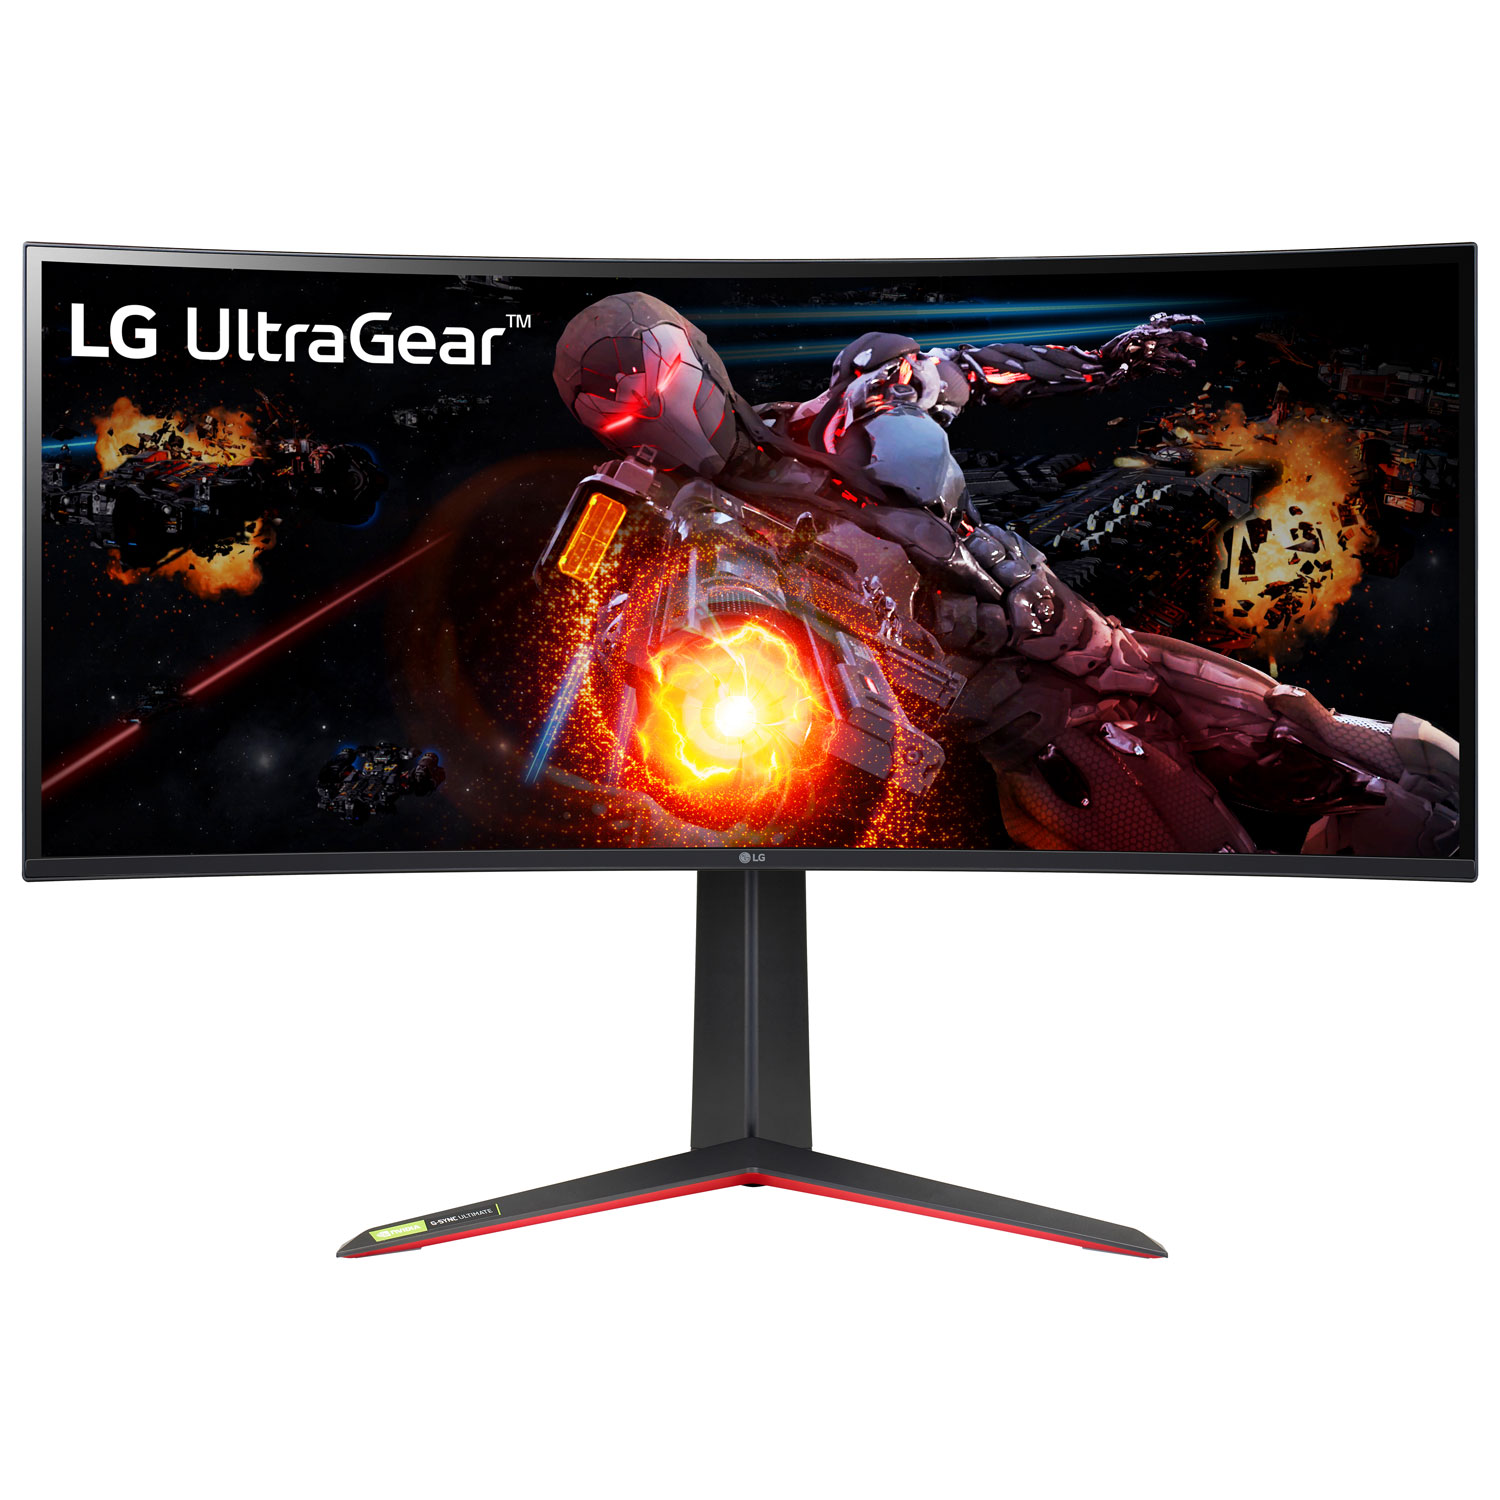 LG UltraGear 34" 1440p WQHD 144Hz 1ms GTG Curved IPS LED G-Sync Gaming Monitor (34GP950G-B) - Black